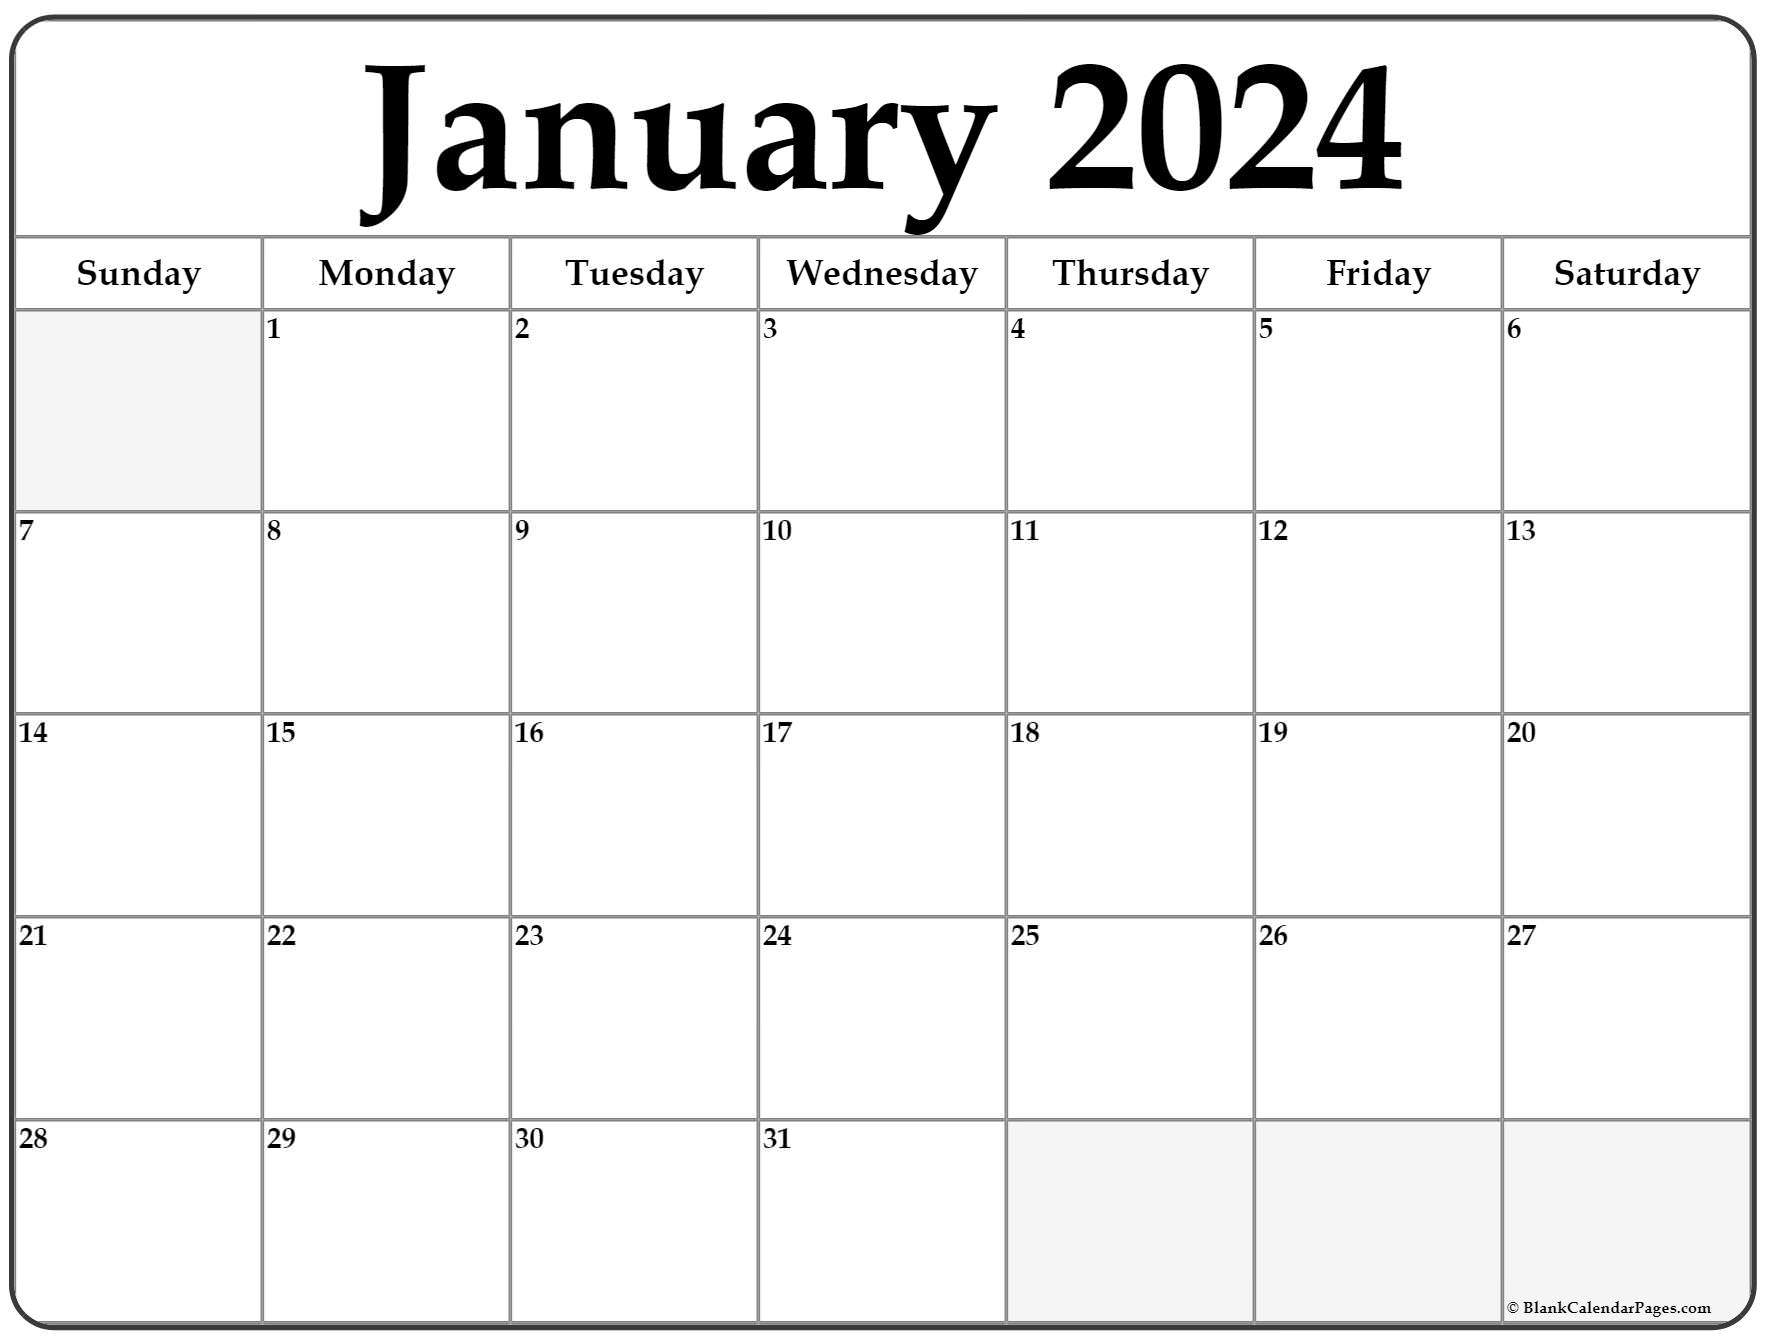 Large Print Calendar 2022 January 2022 Calendar | Free Printable Calendar Templates